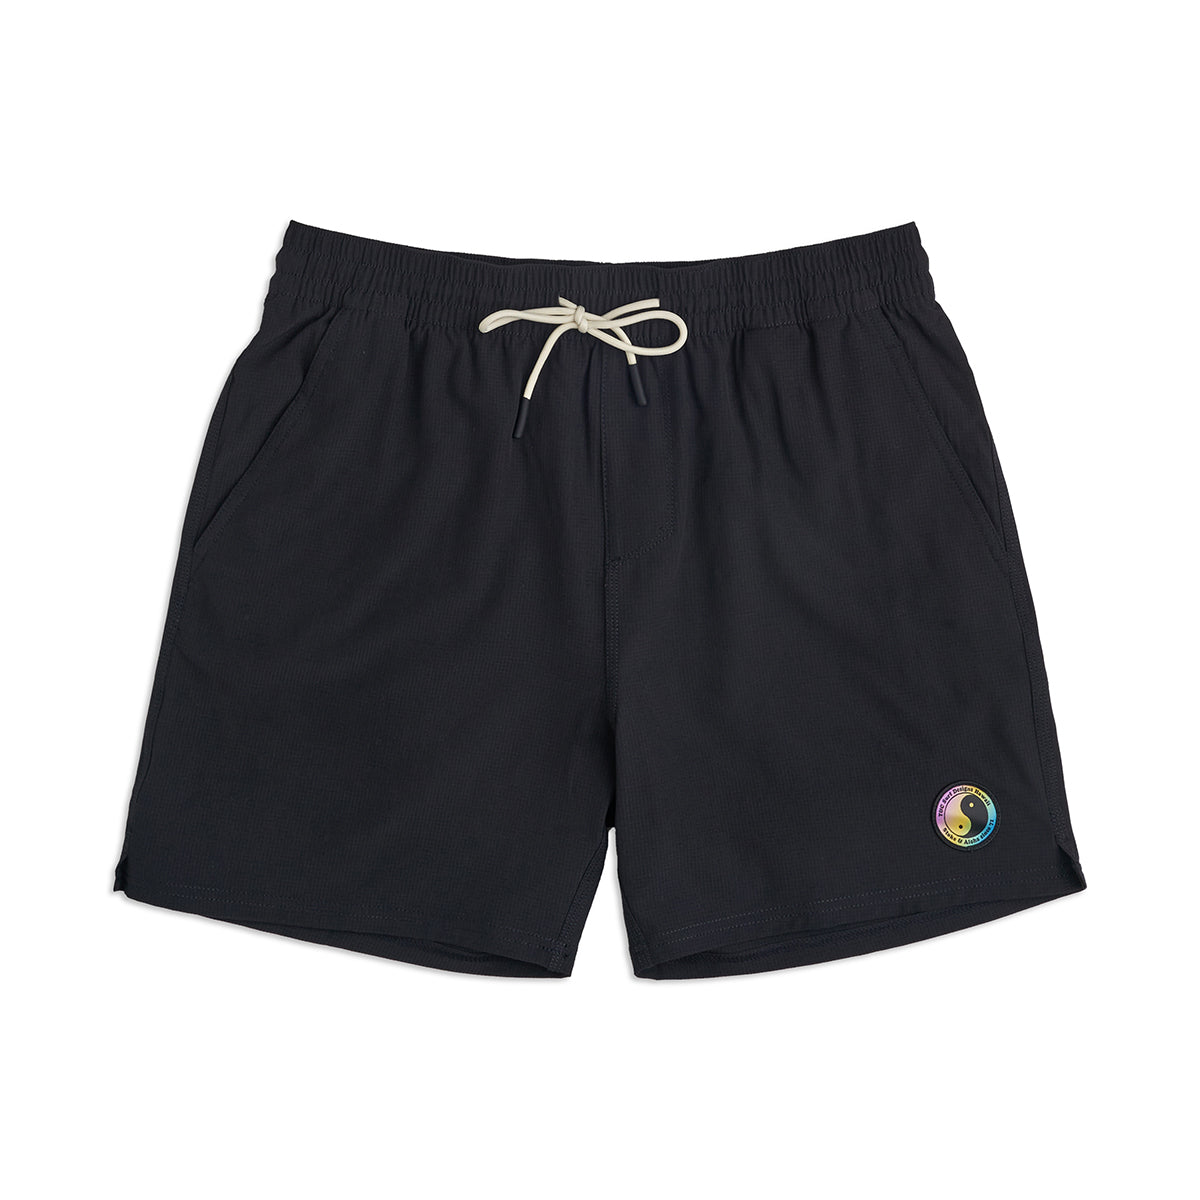 OG Elastic 16.5" Beach Shorts - Black